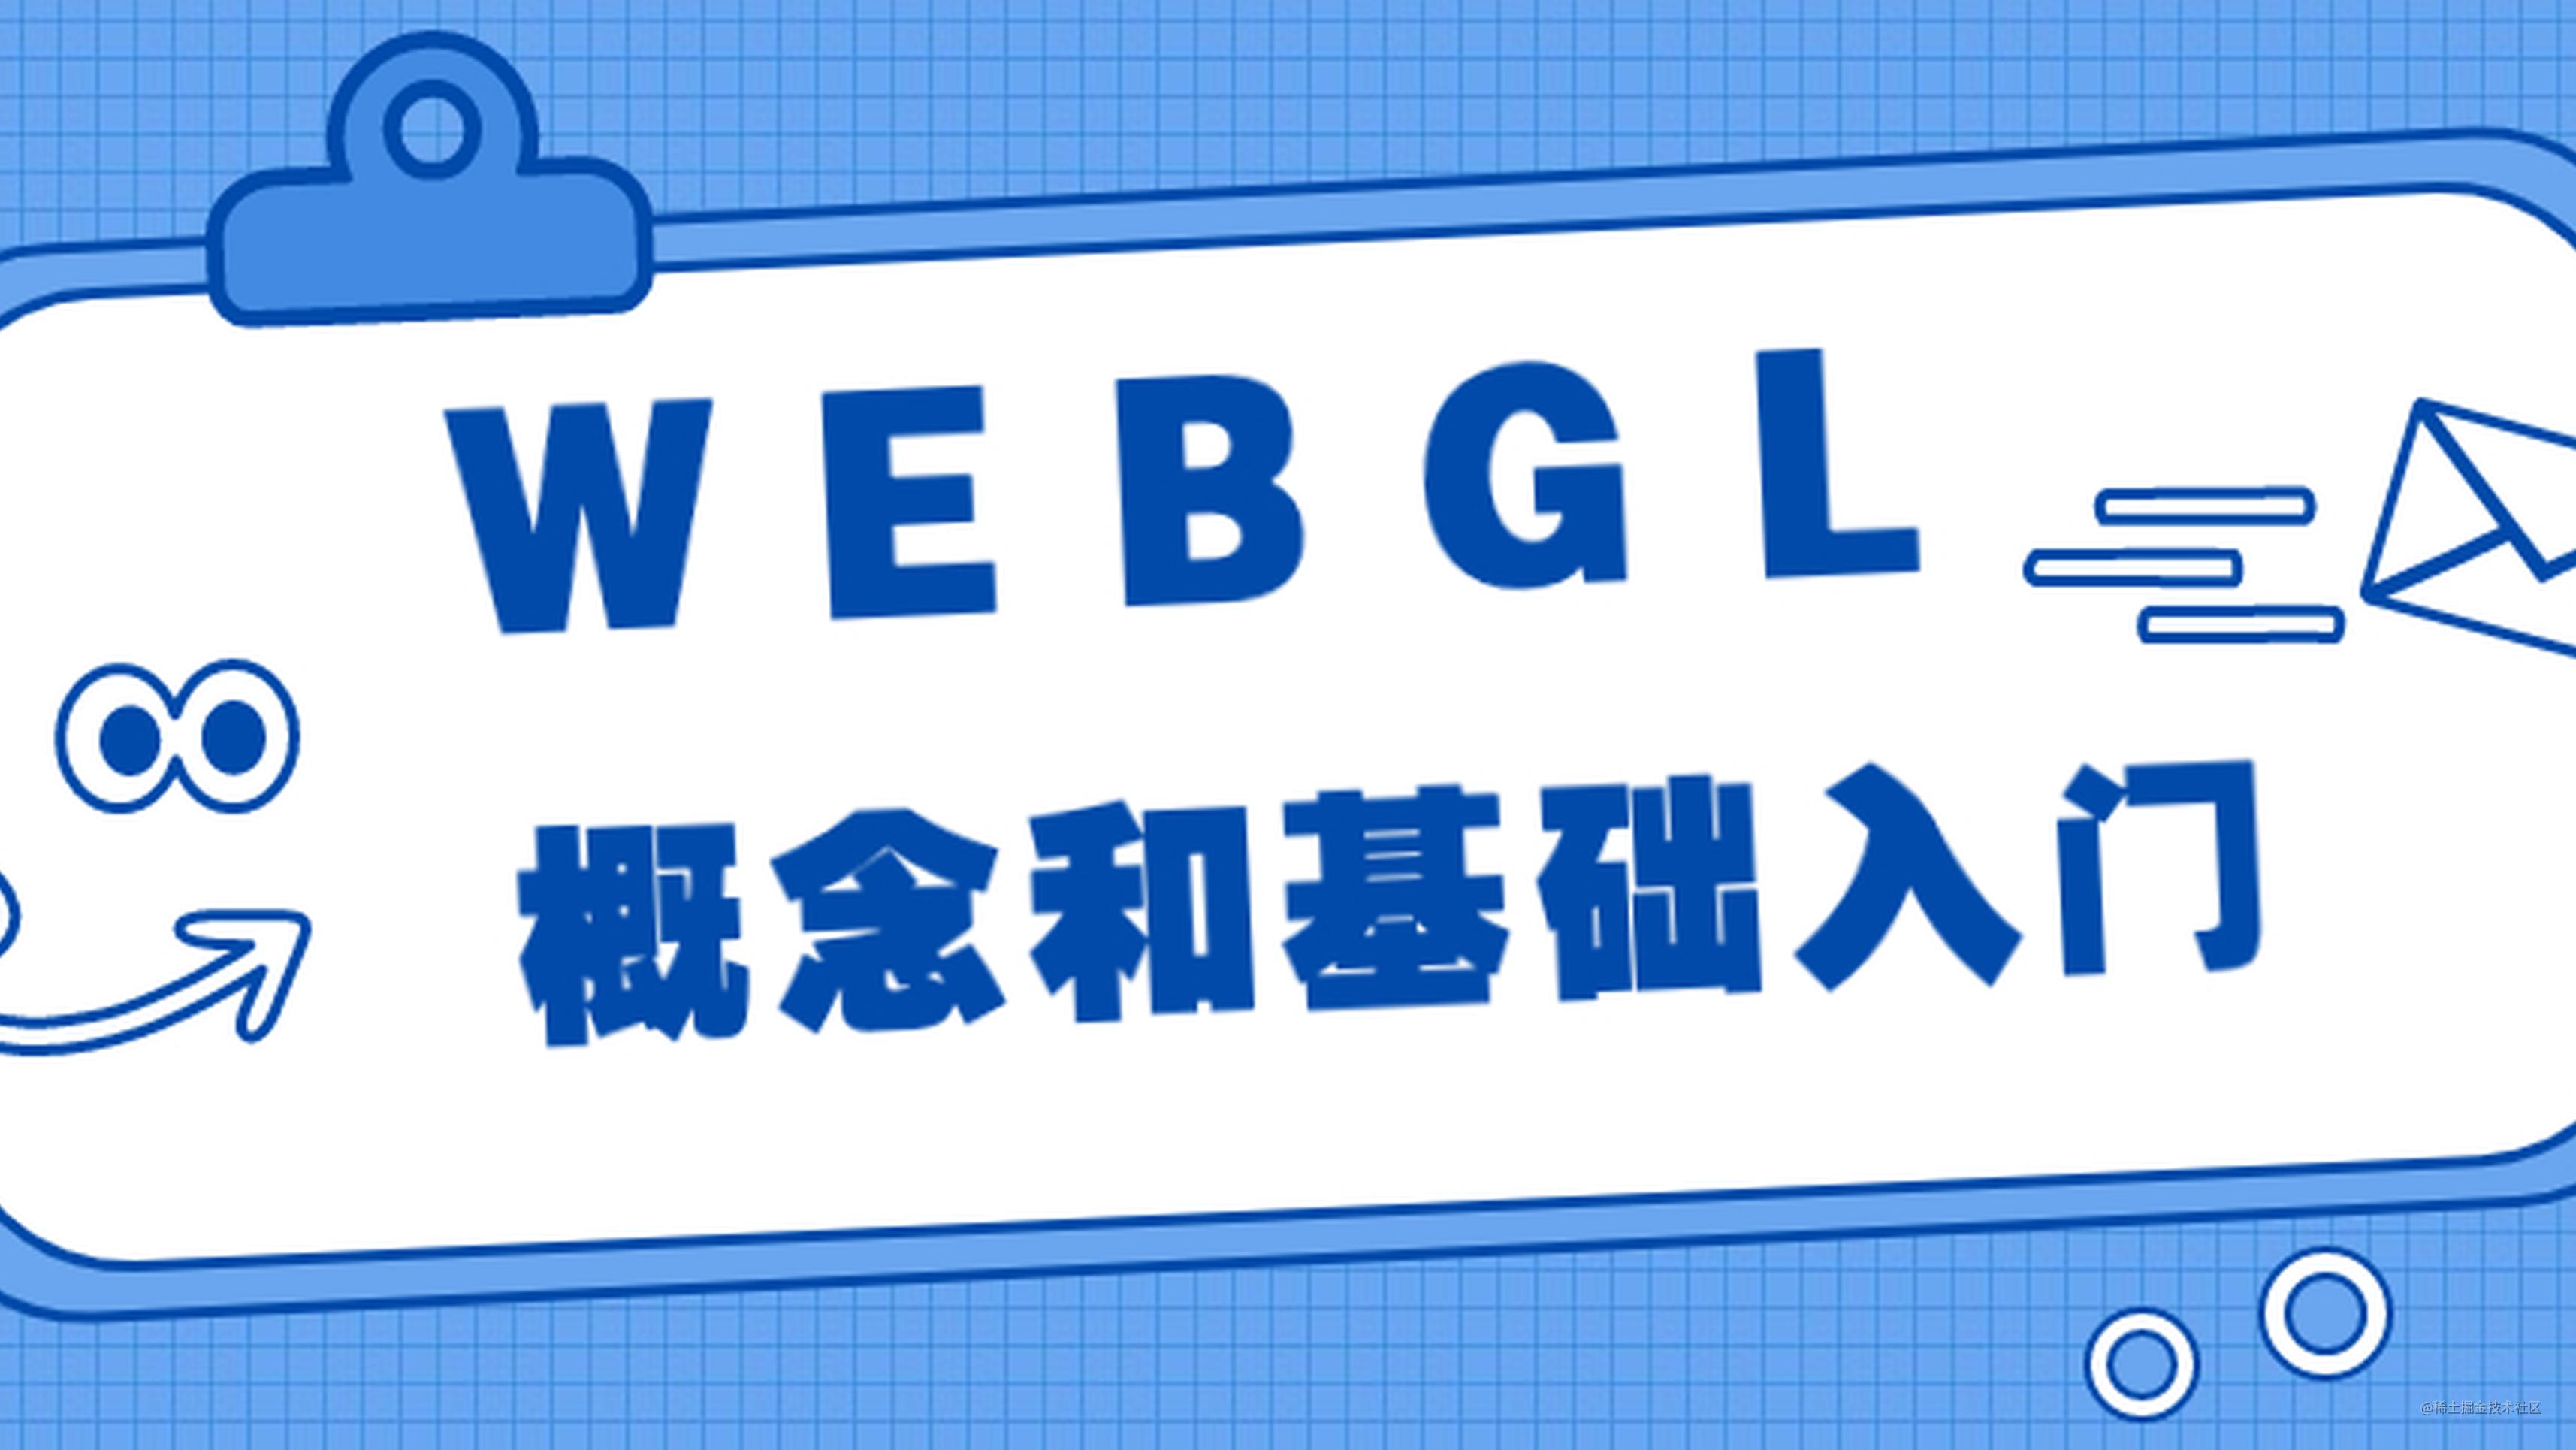  WebGL 概念和基础入门